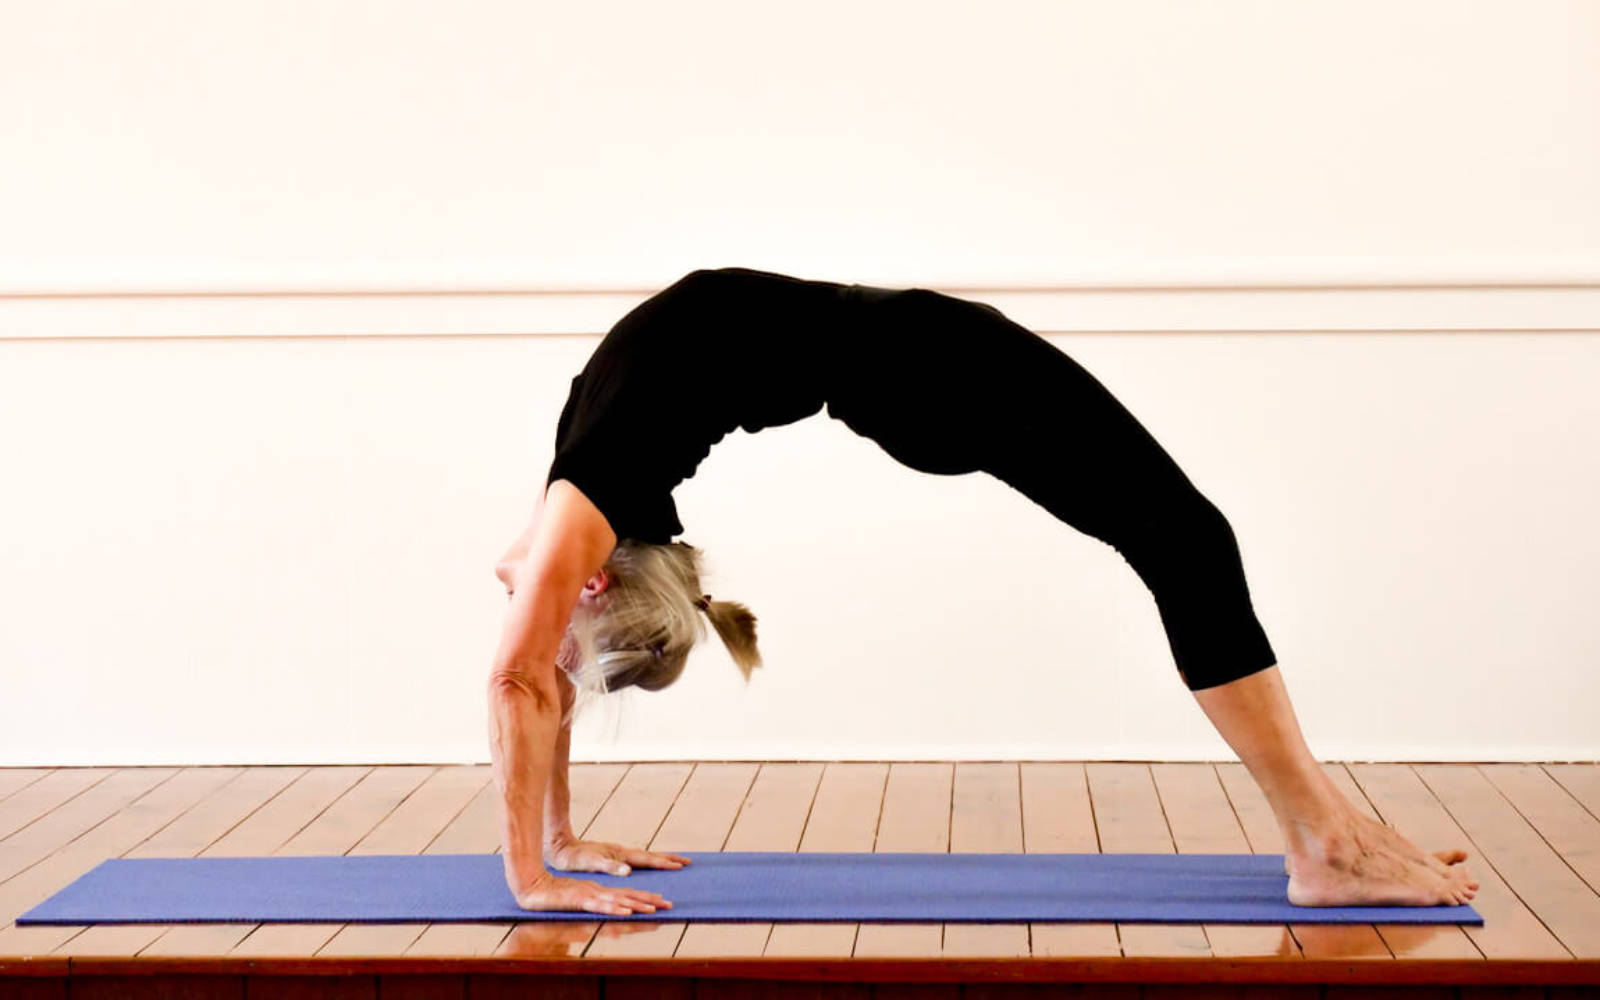 Iyengar Yoga Self-Practice Sequence — Central Yoga School